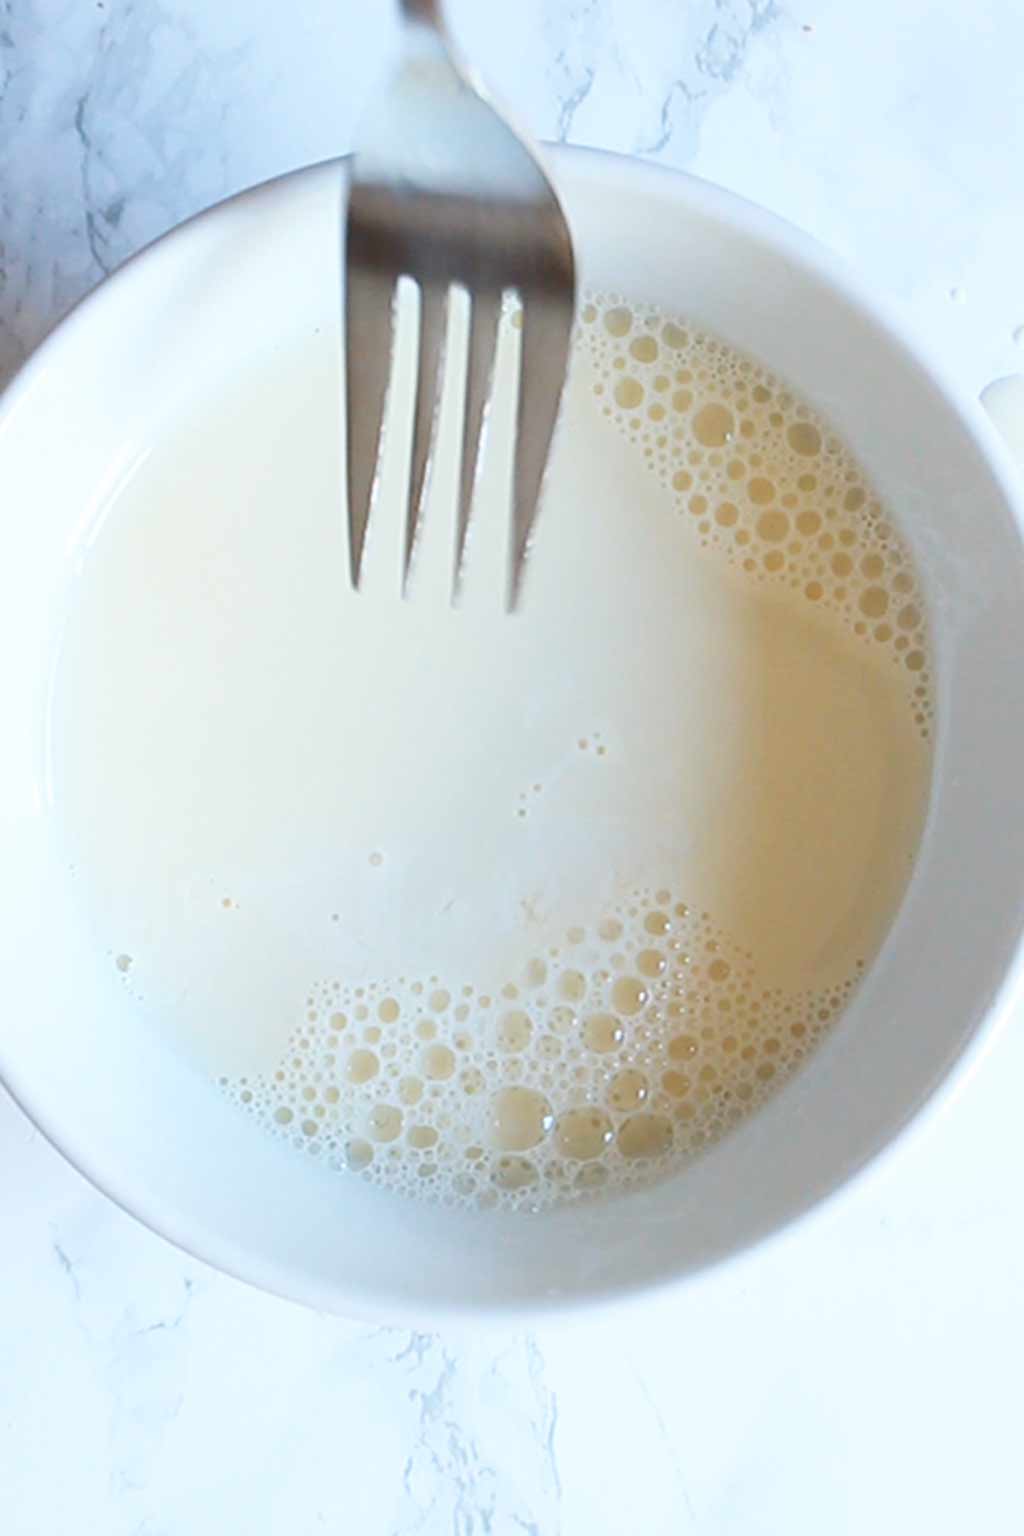 vegan buttermilk in a white ramekin